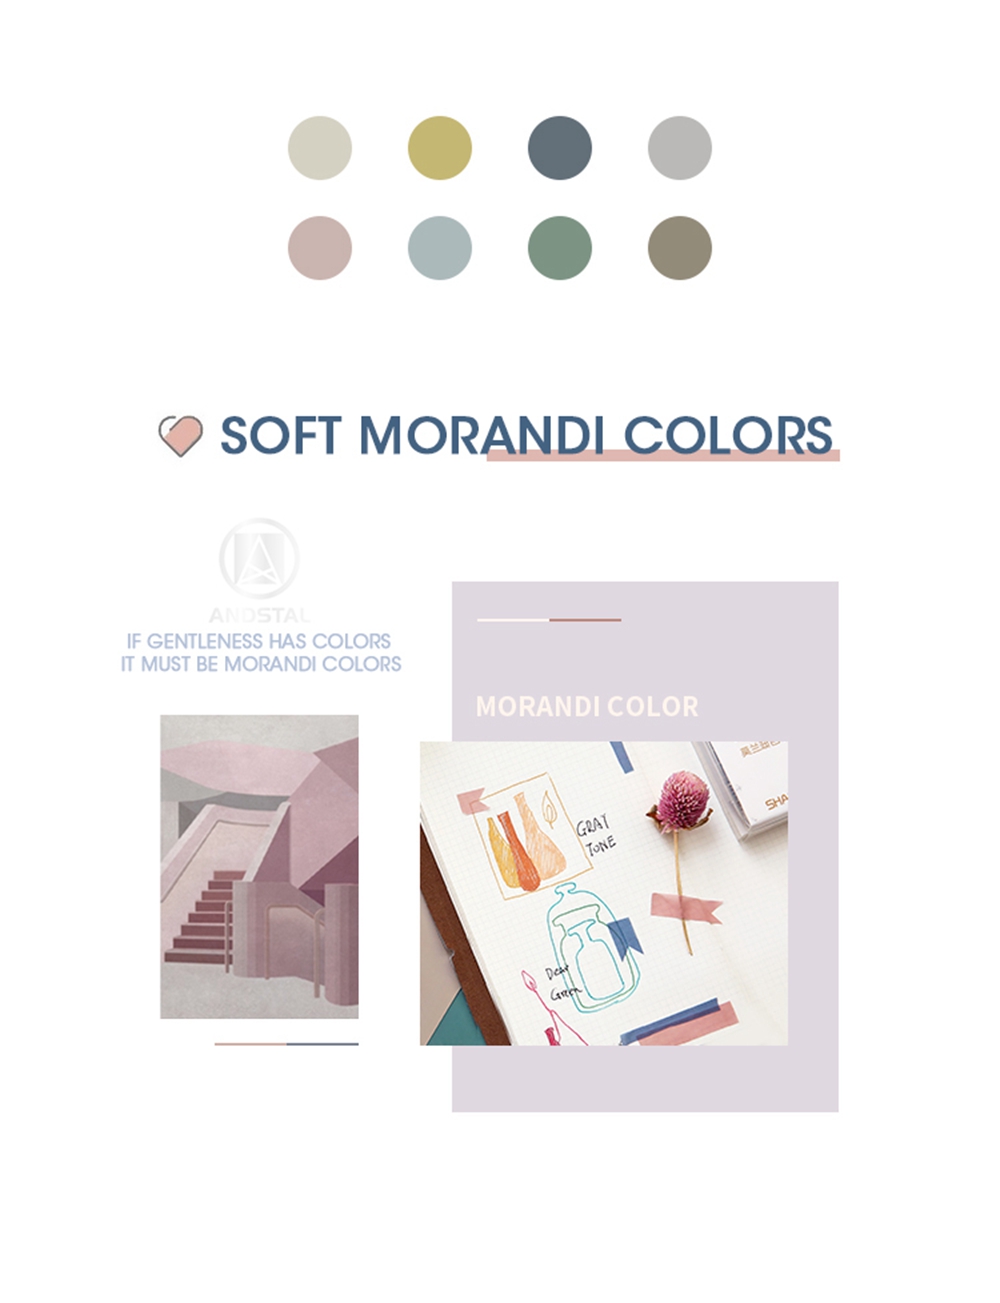 Morandi-9-Pcsset-Marker-Pens-05mm-Scrapbooking-Paper-Craft-Colored-Multi-Color-Rainbow-Graffiti-Writ-1655711-2